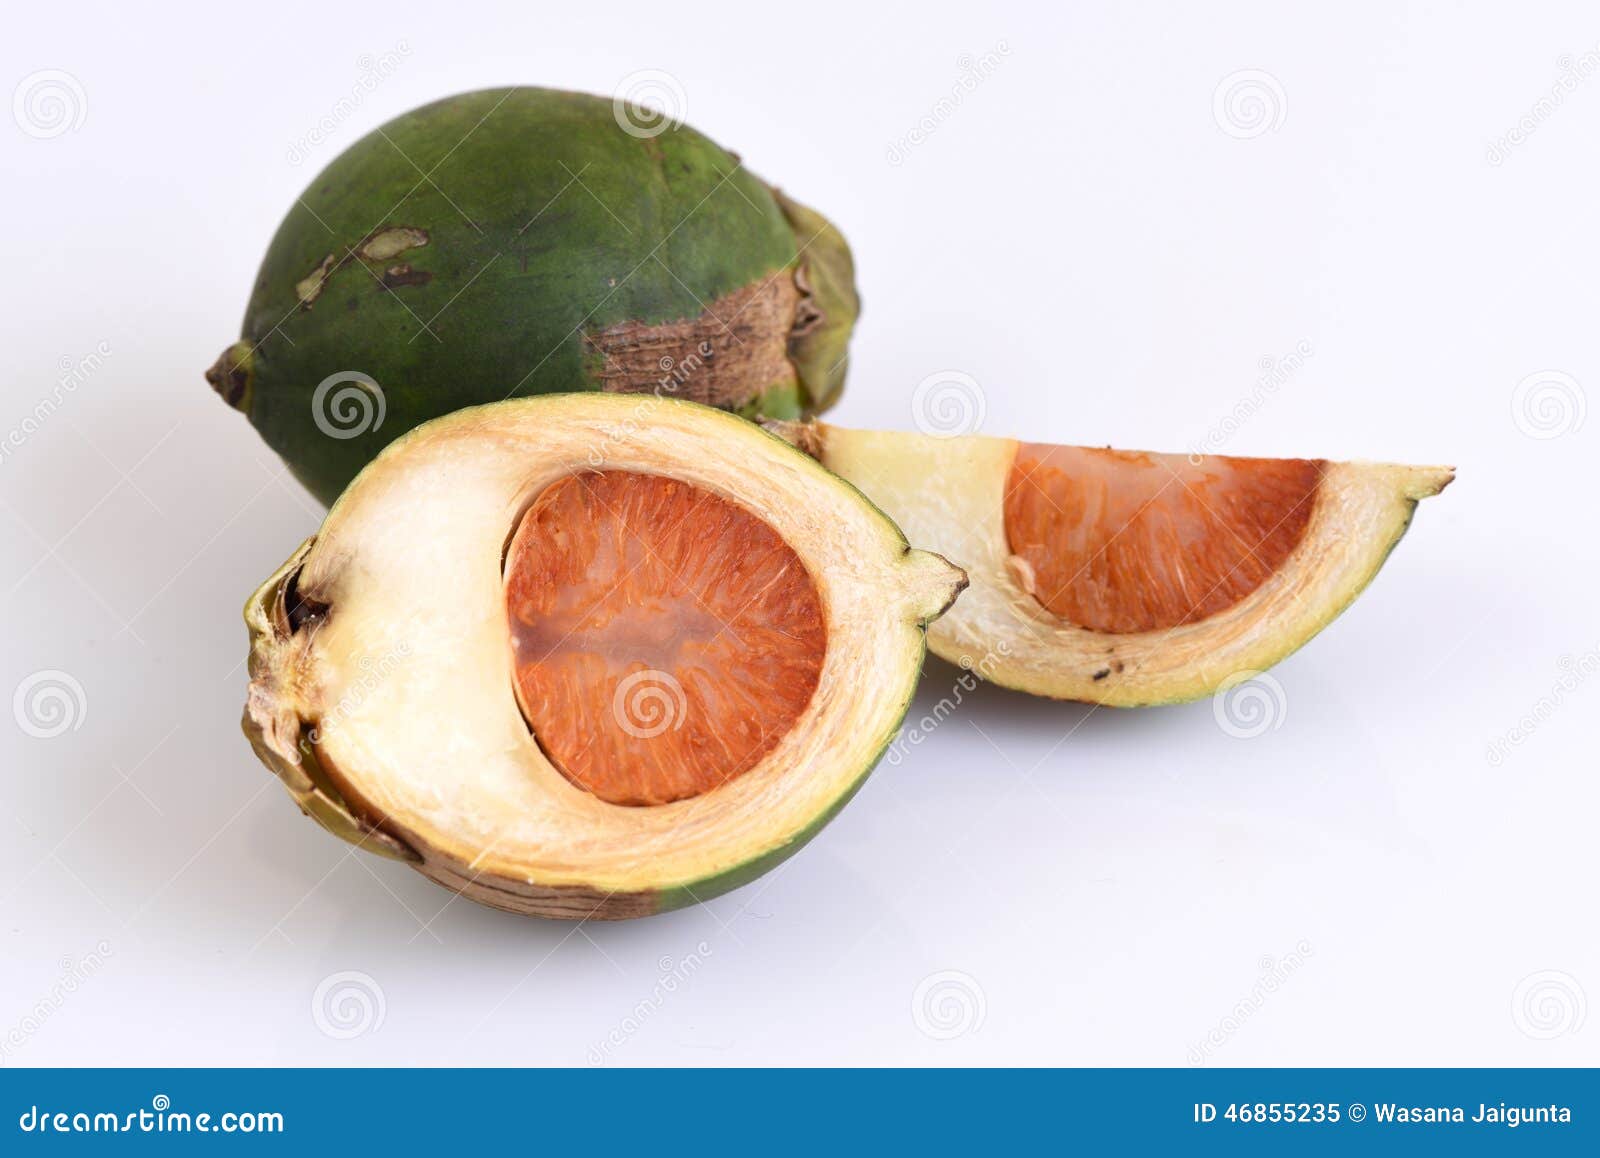 ripe acera or betel palm nut fruit on white background with path